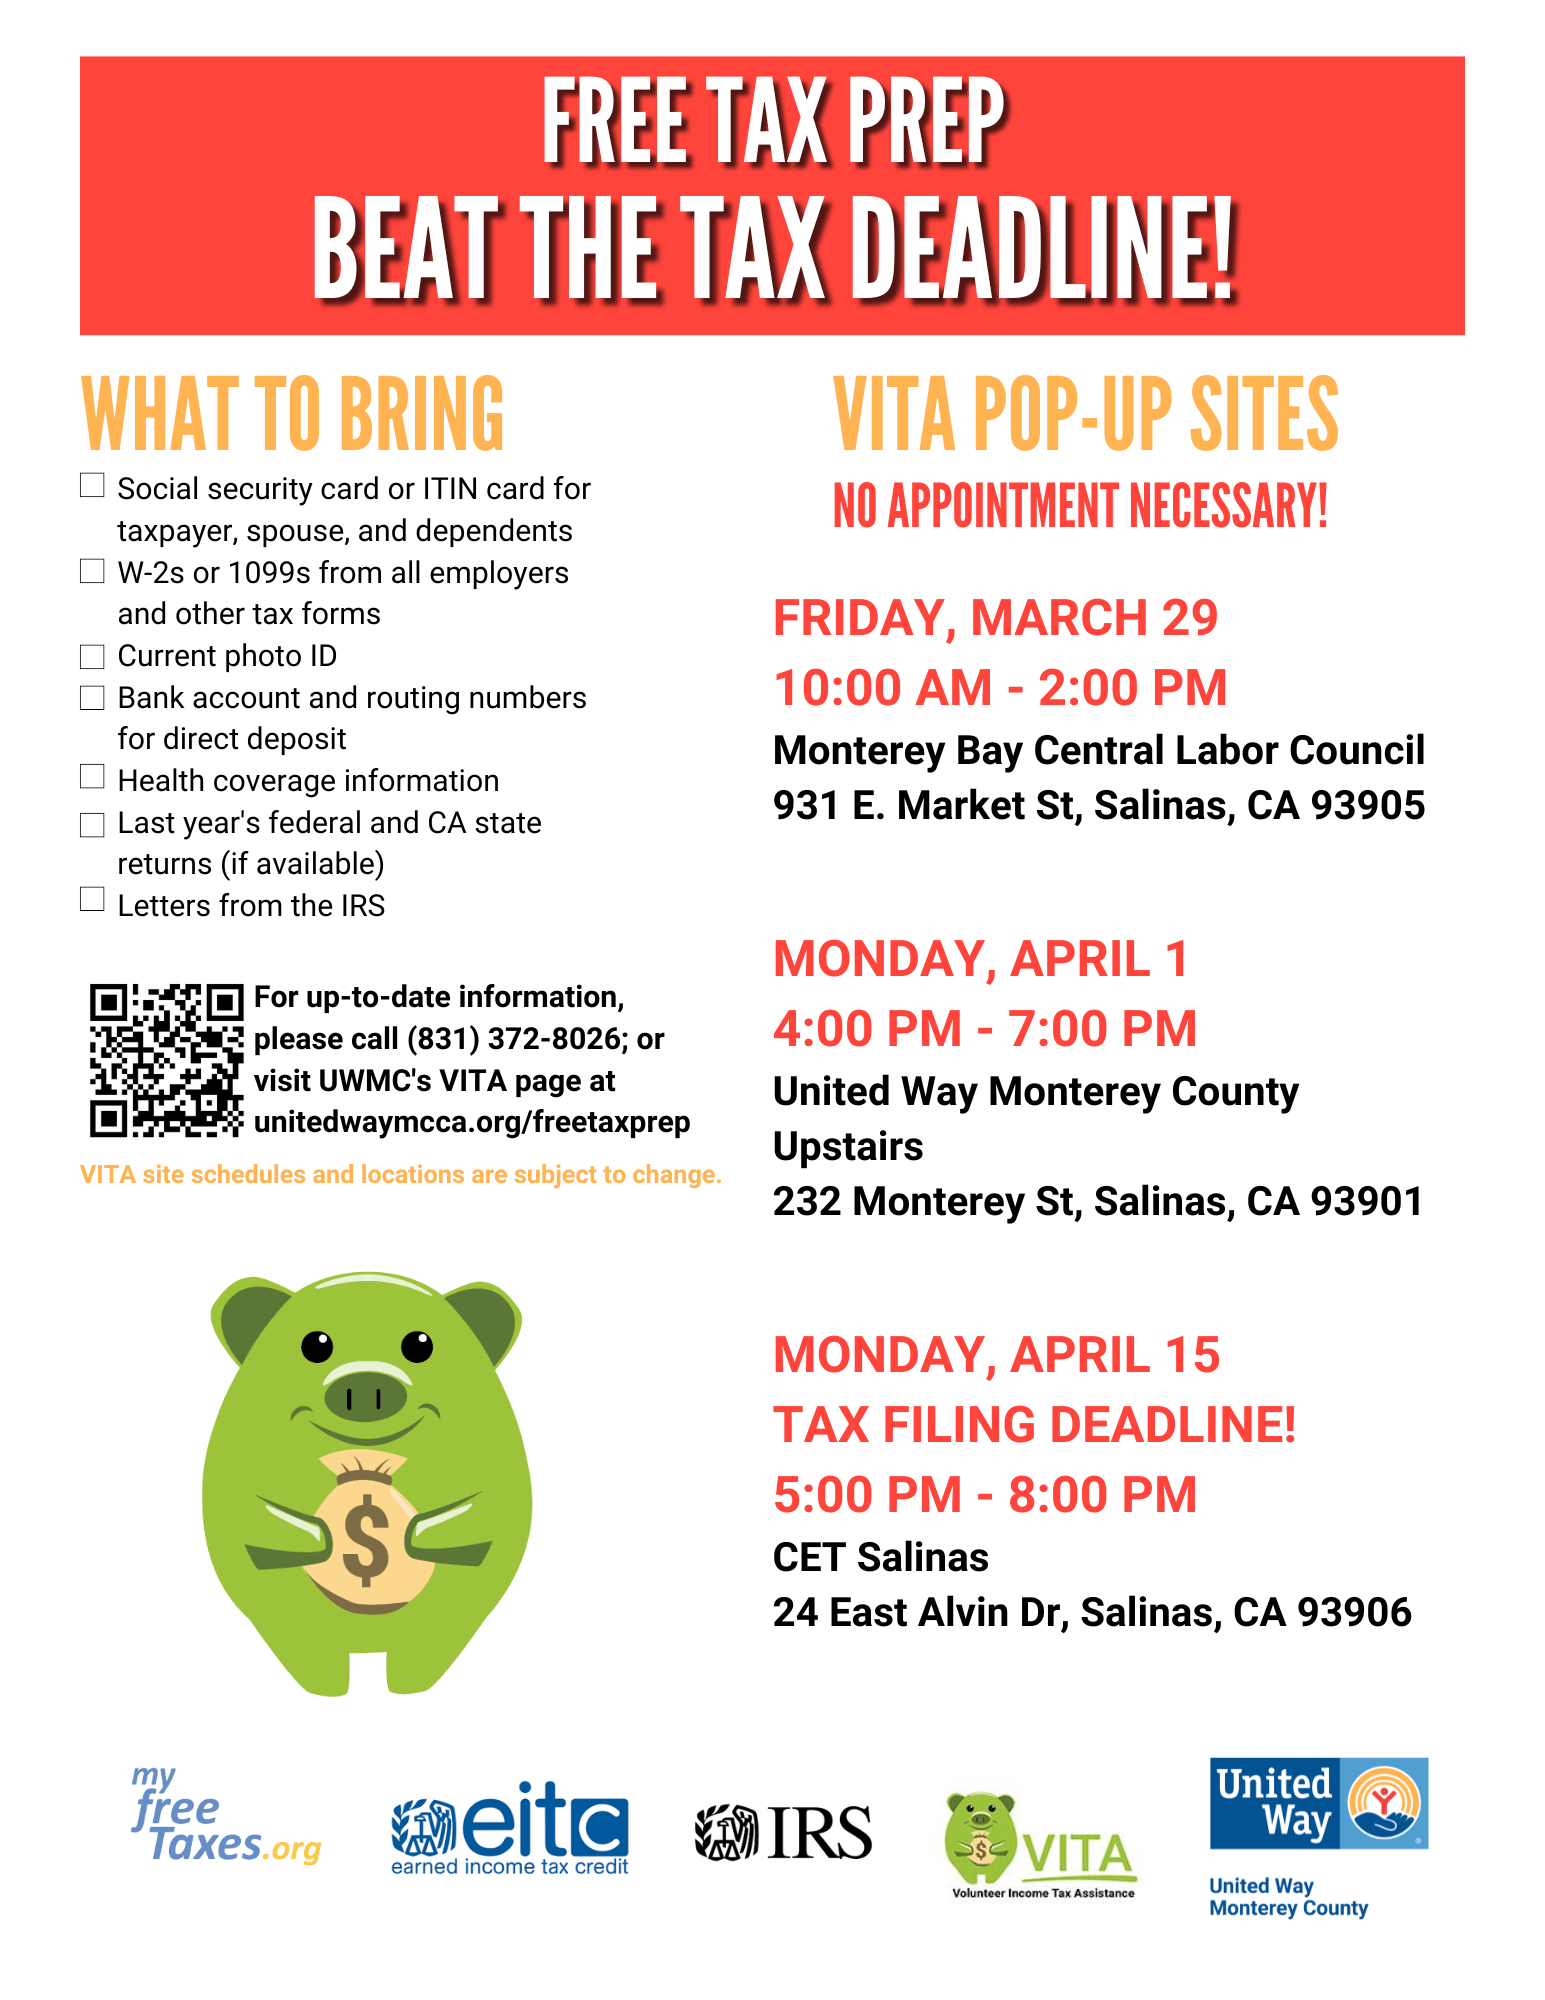 United Way Monterey County VITA Free Tax Prep